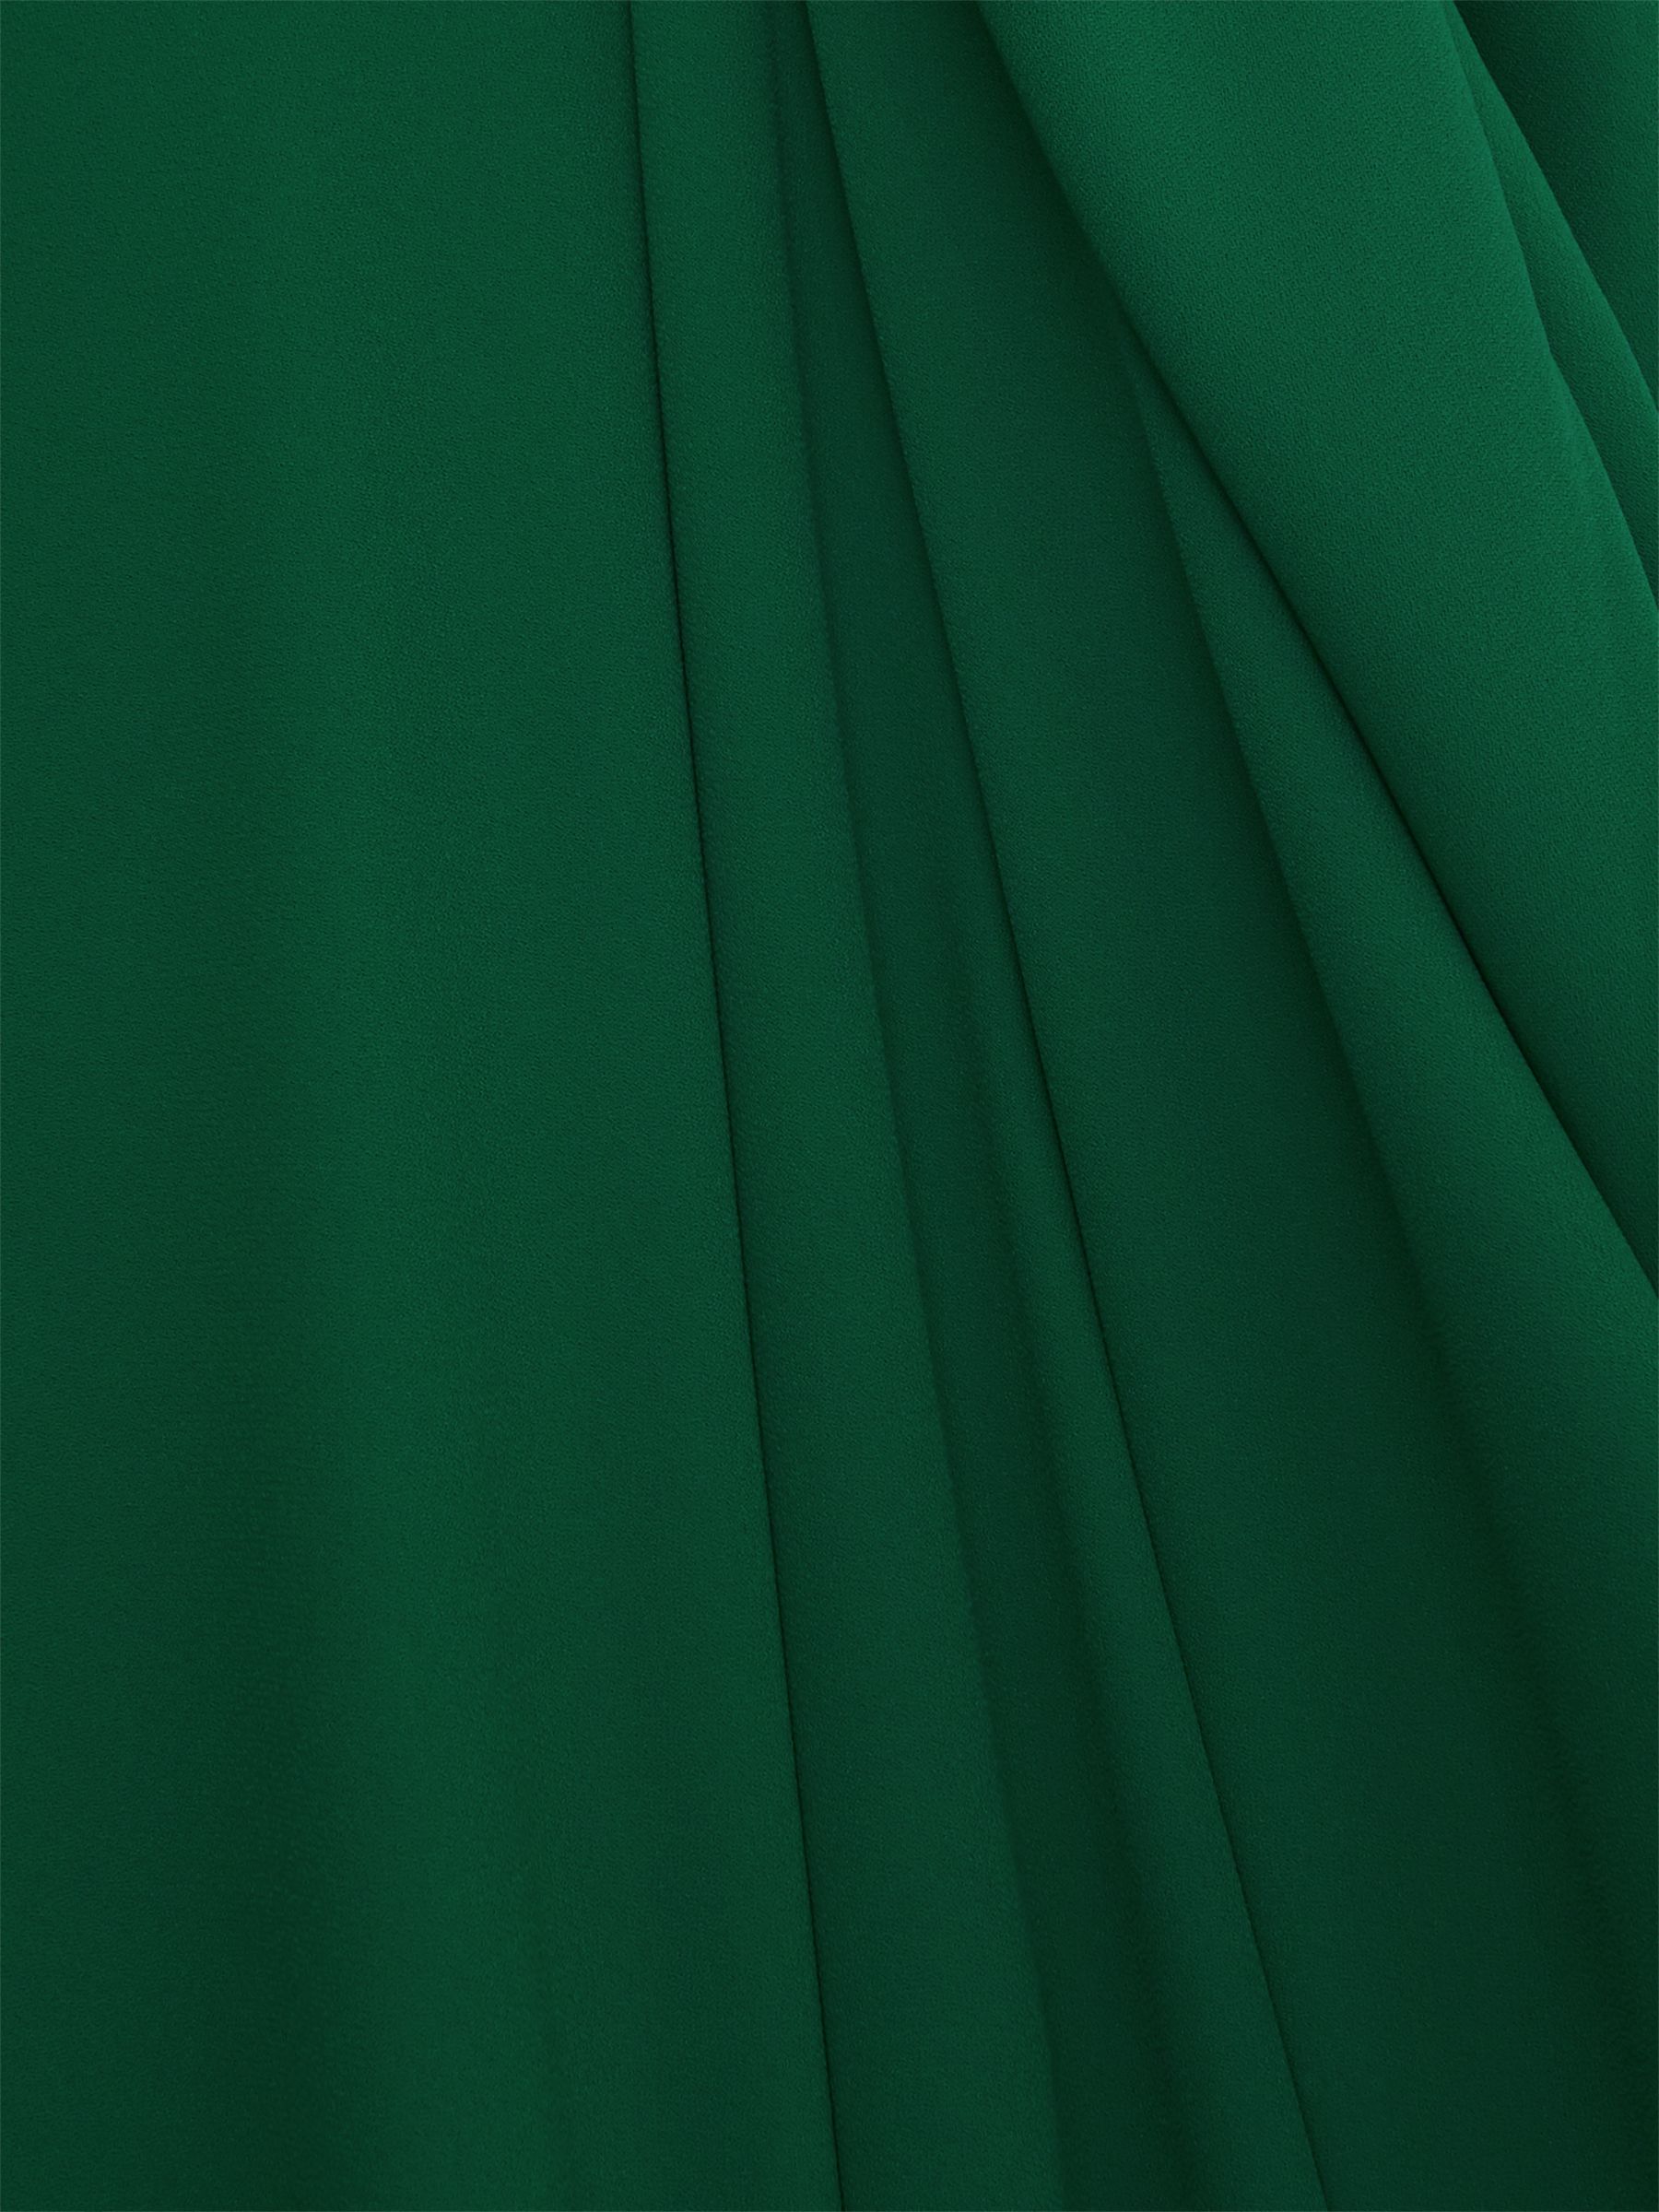 Hobbs Magnolia Belted Midi Dress, Green, 18